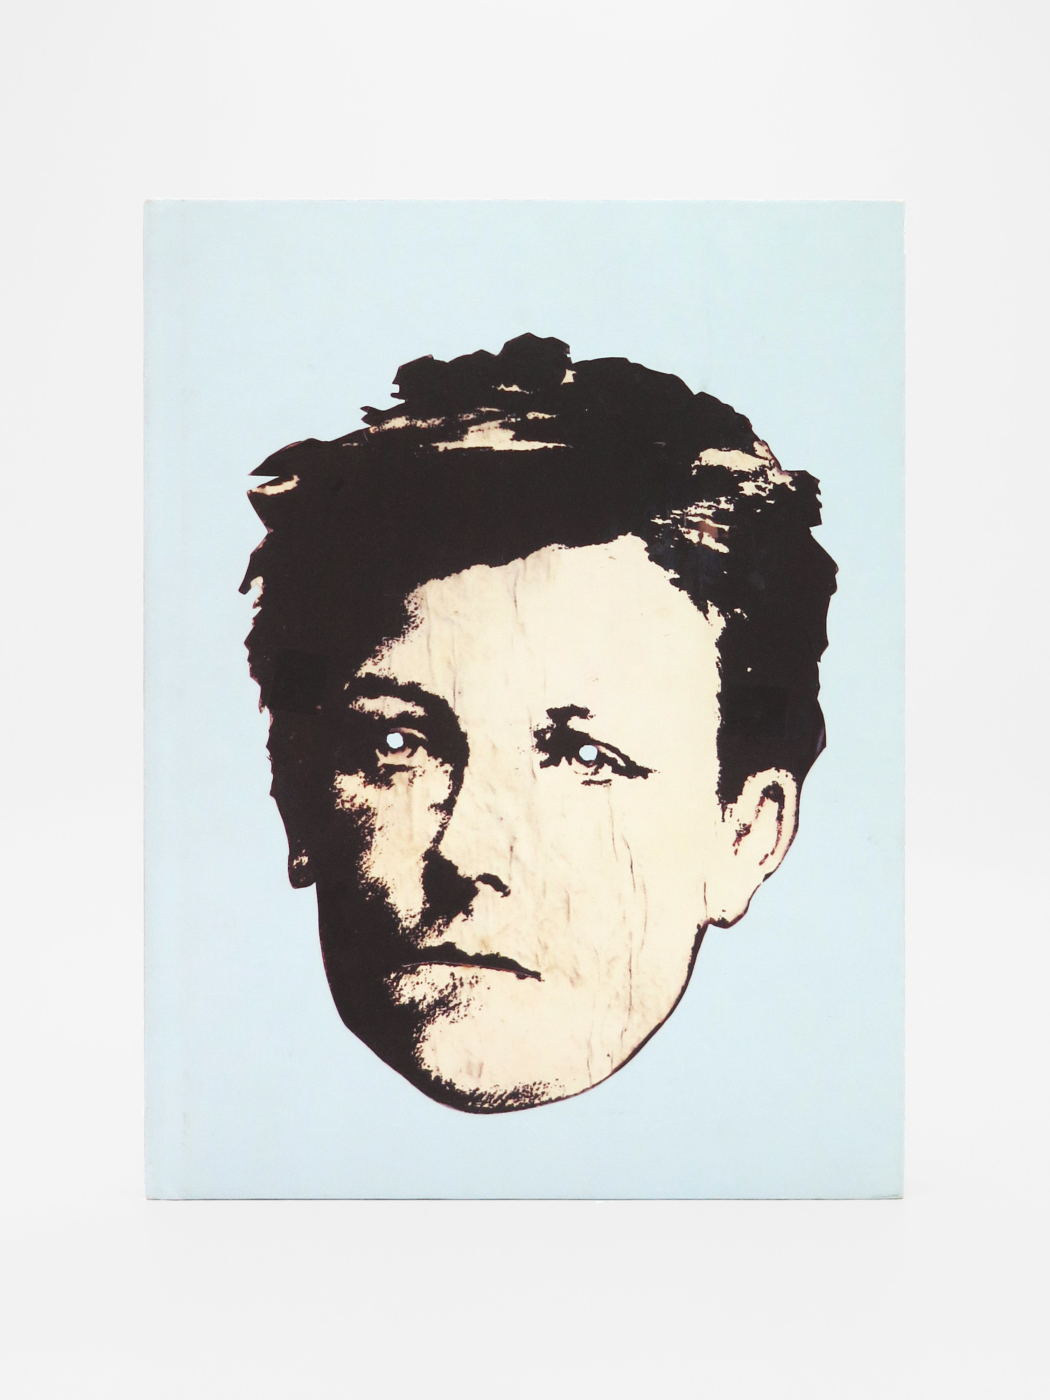 David Wojnarowicz, Rimbaud In New York 1978-79